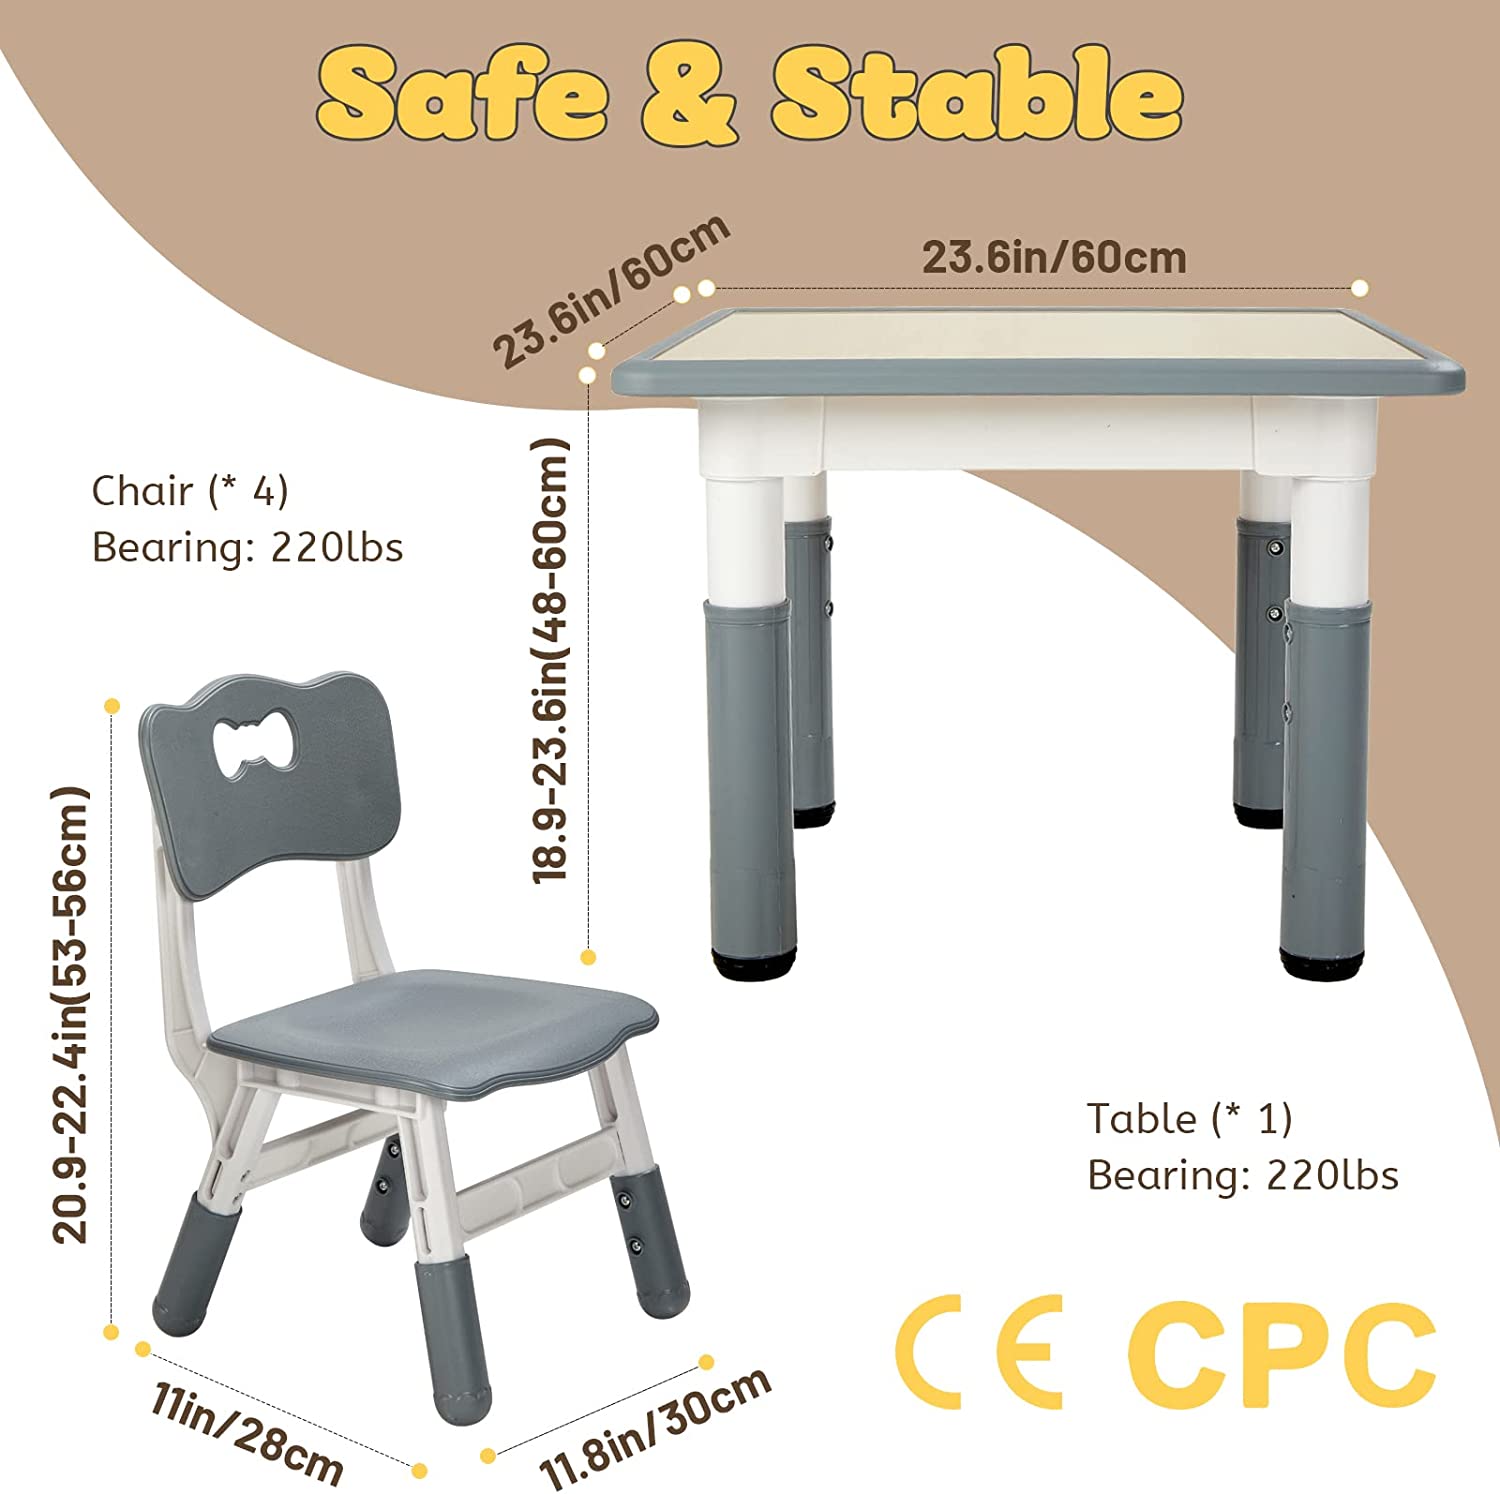 Adjustable Height Kids Study Desk and Chair Set Gray